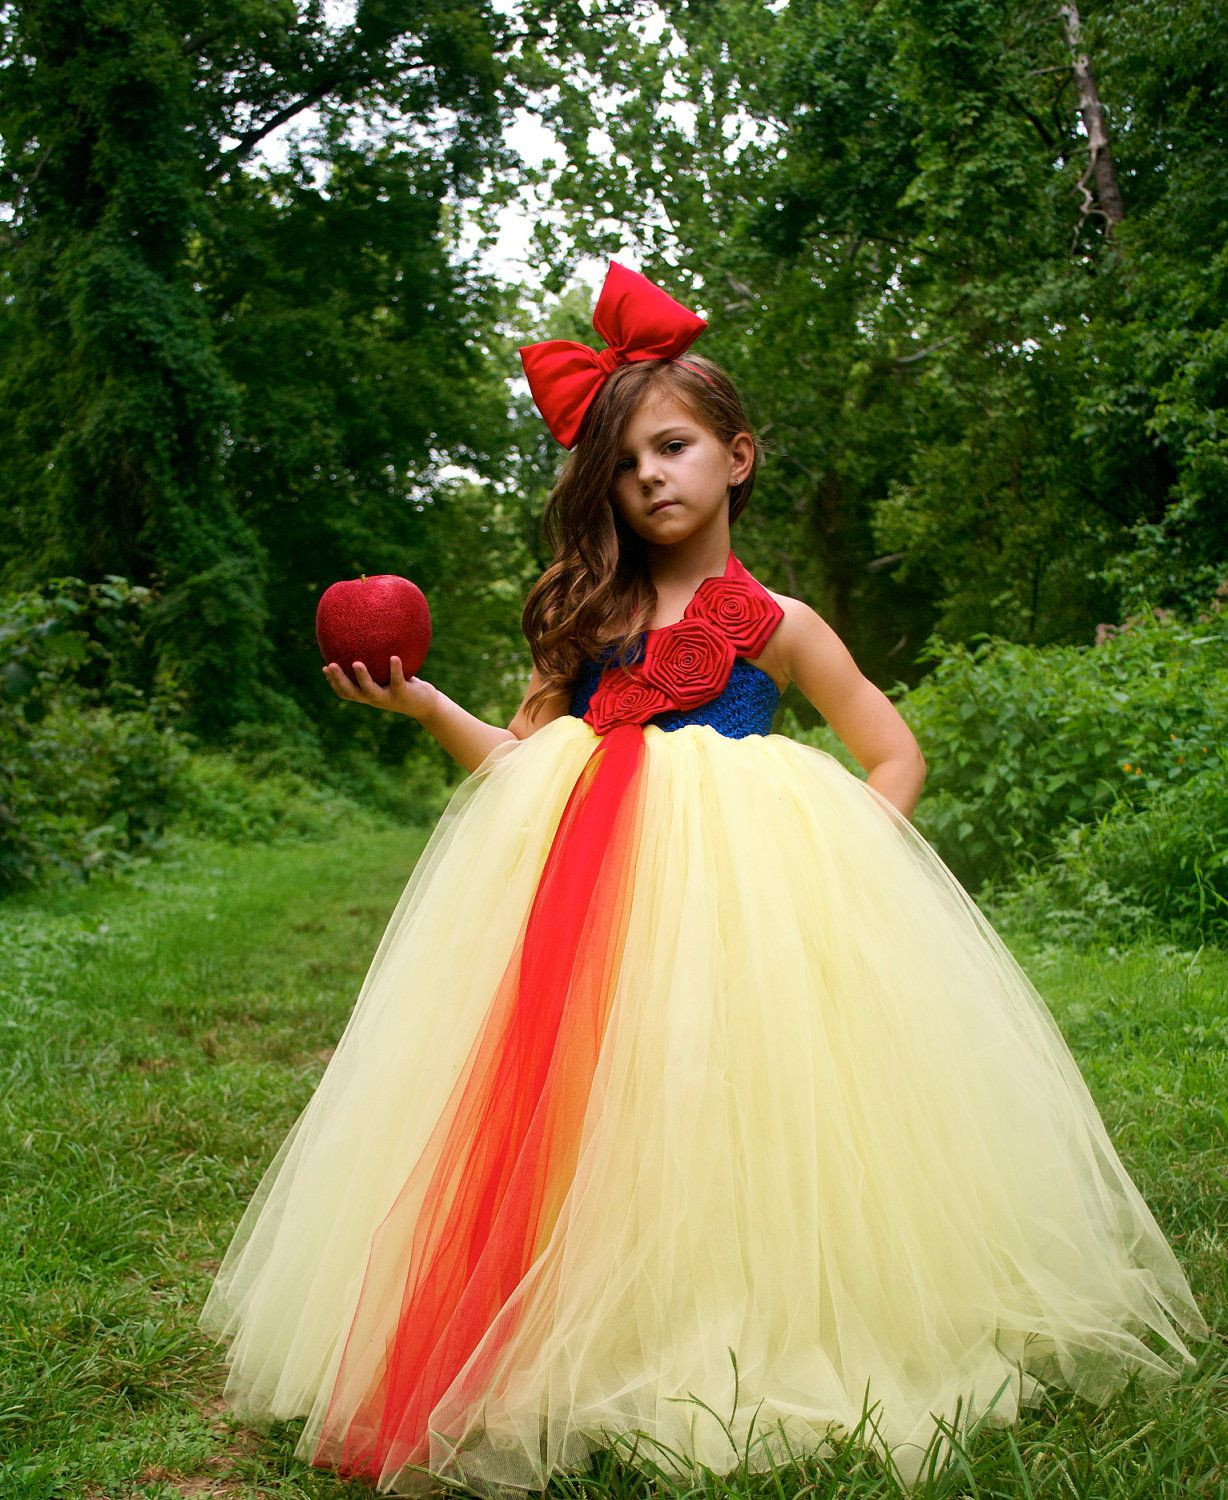 DIY Snow White Costume Toddler
 Best 25 Snow white costume ideas on Pinterest